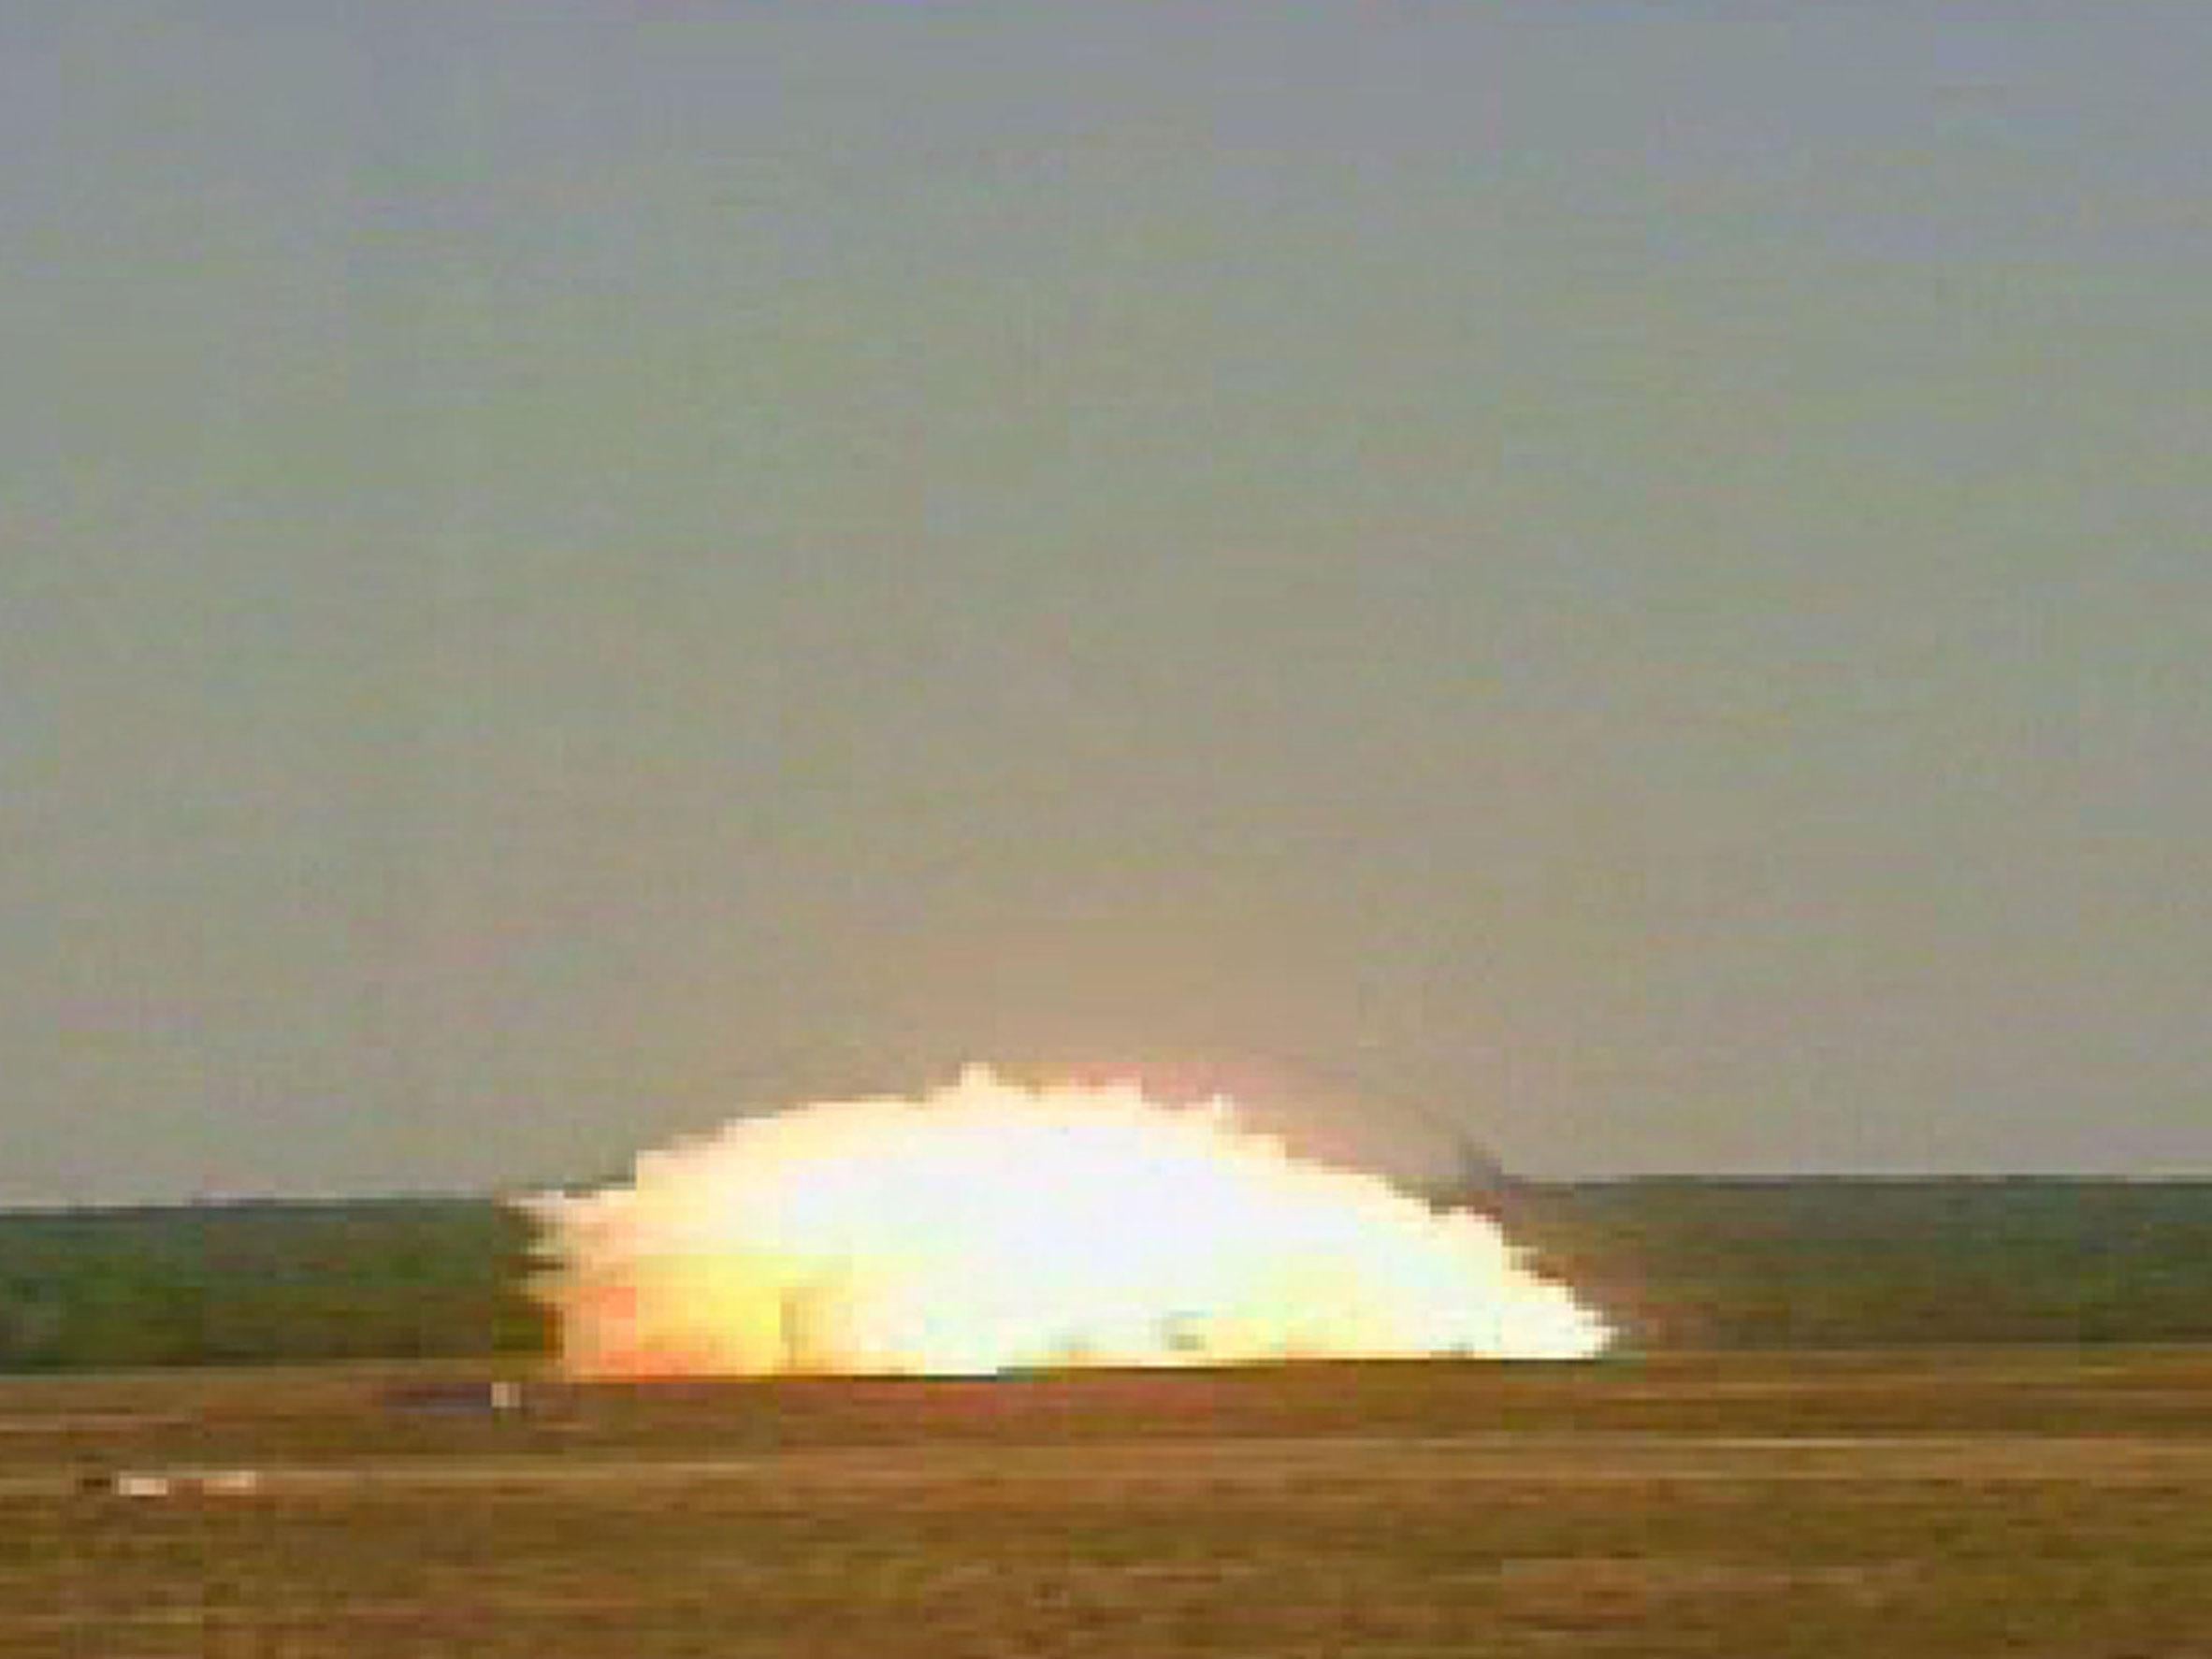 A test detonation of the GBU-43 bomb in Florida in 2003